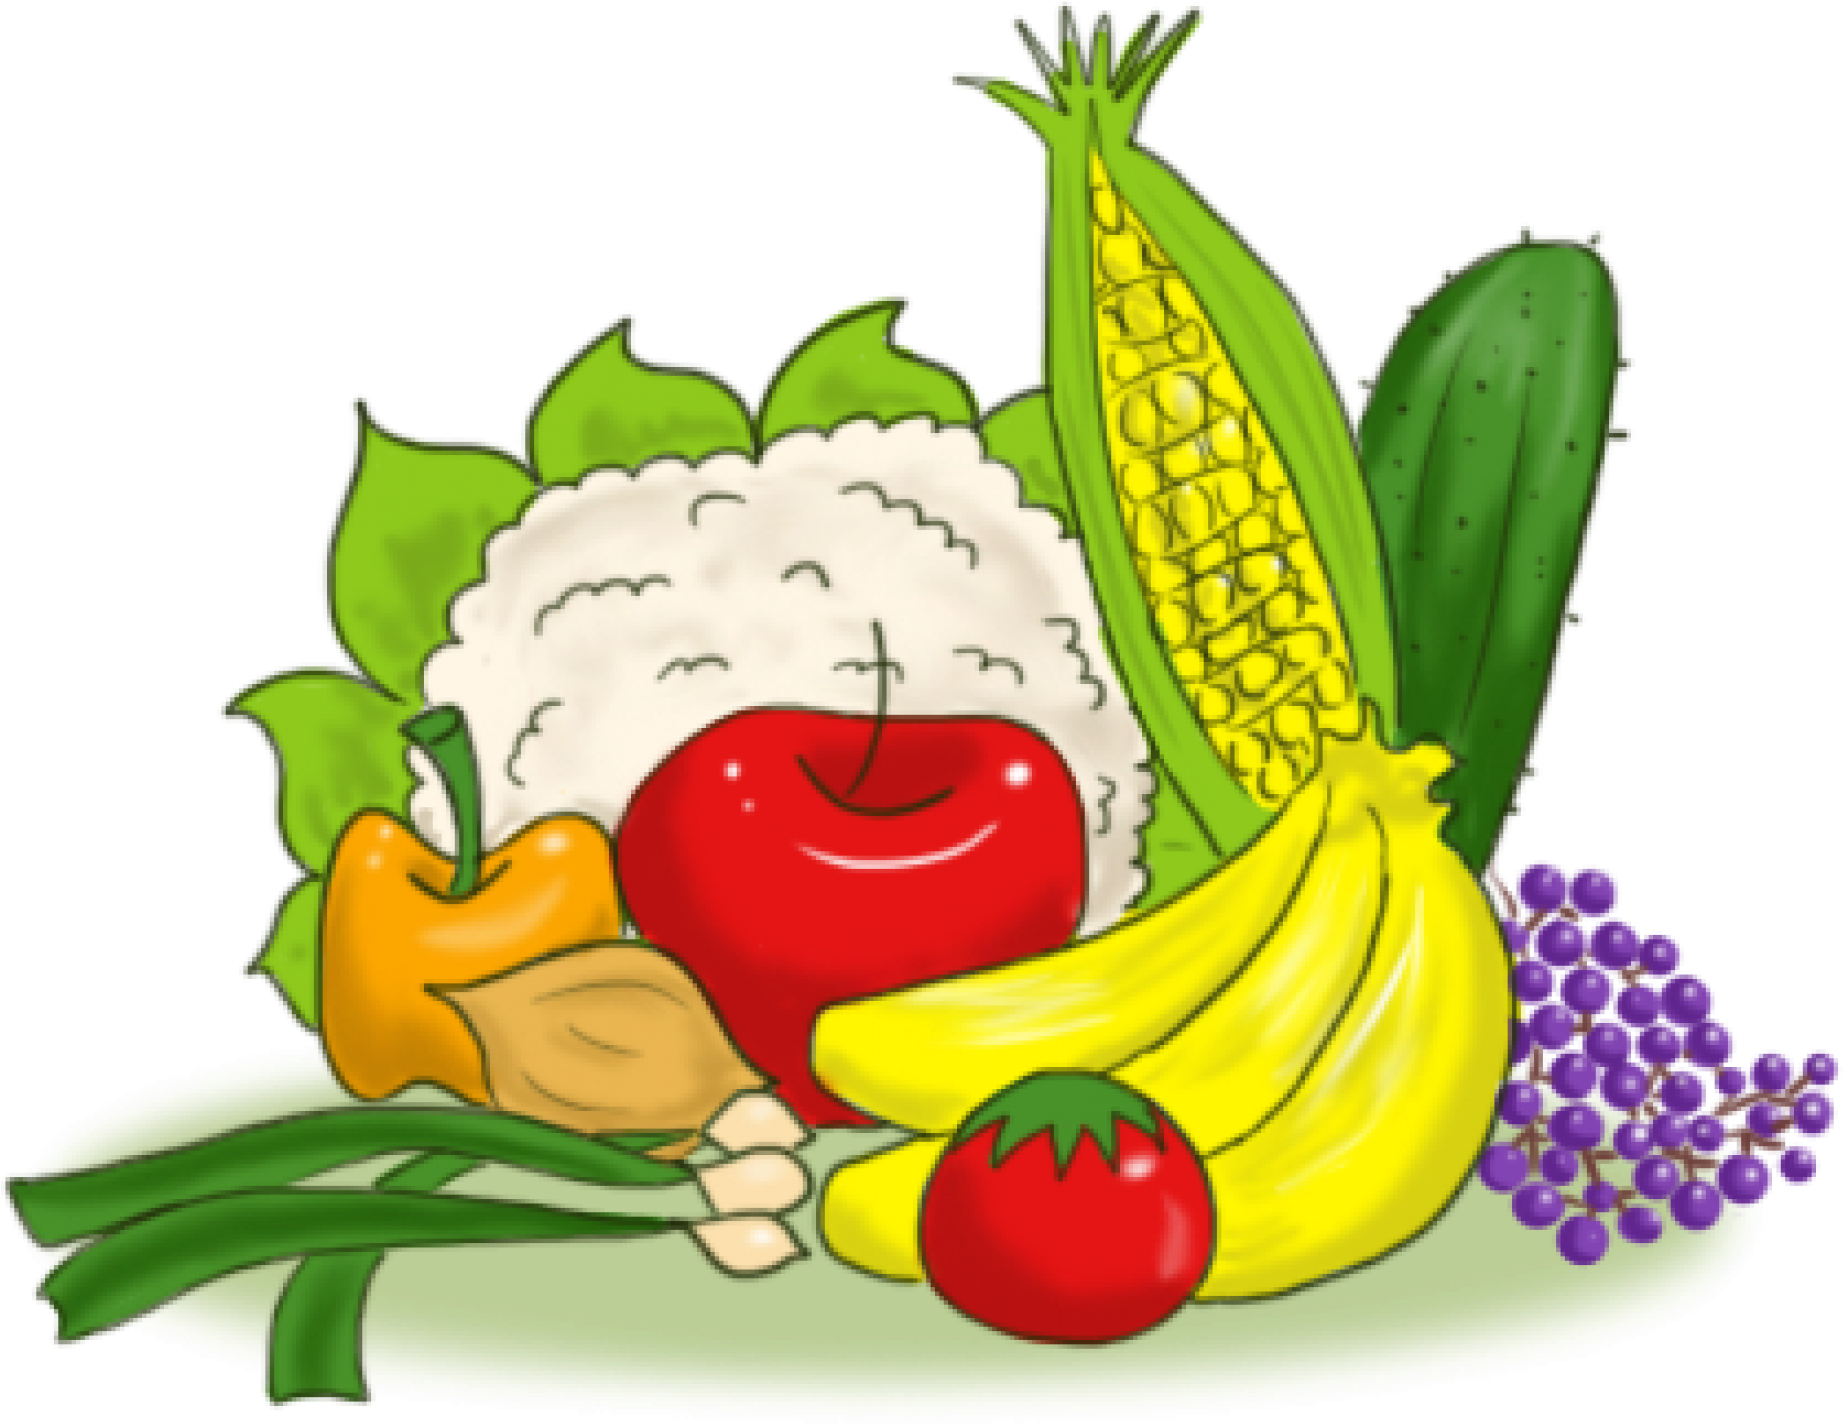 Cartoon Healthy Food Images - Healthy Food Cartoon Pictures | Bodegawasues